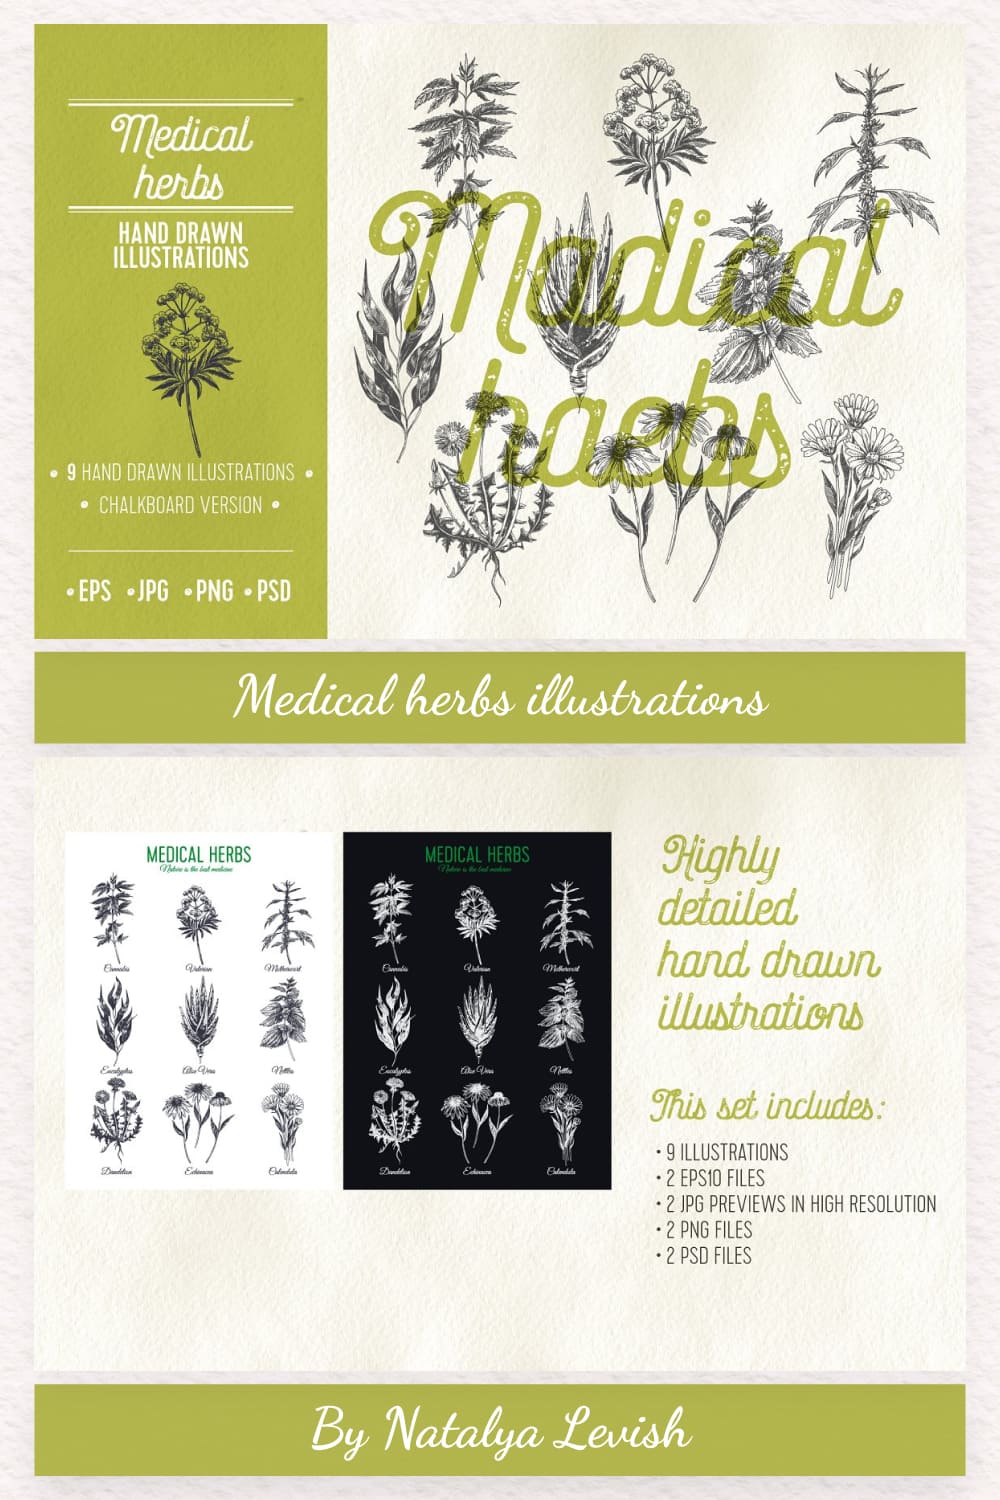 medical herbs illustrations pinterest image.